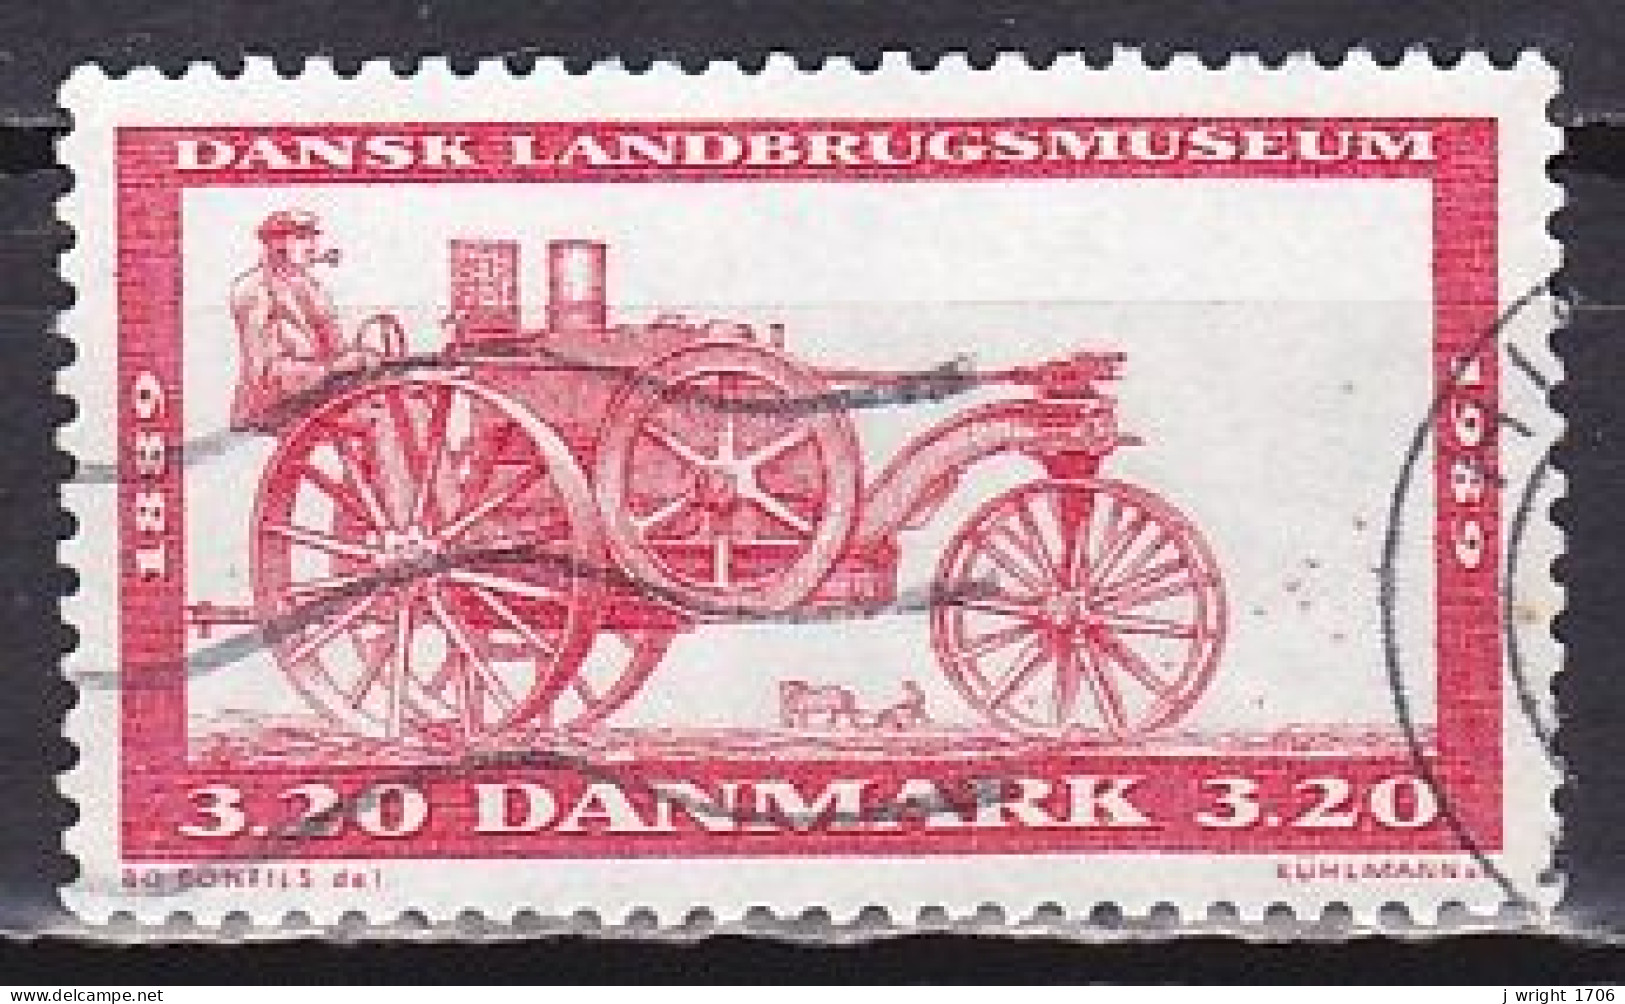 Denmark, 1989, Danish Agricultural Museum Centenary, 3.20kr, USED - Gebruikt